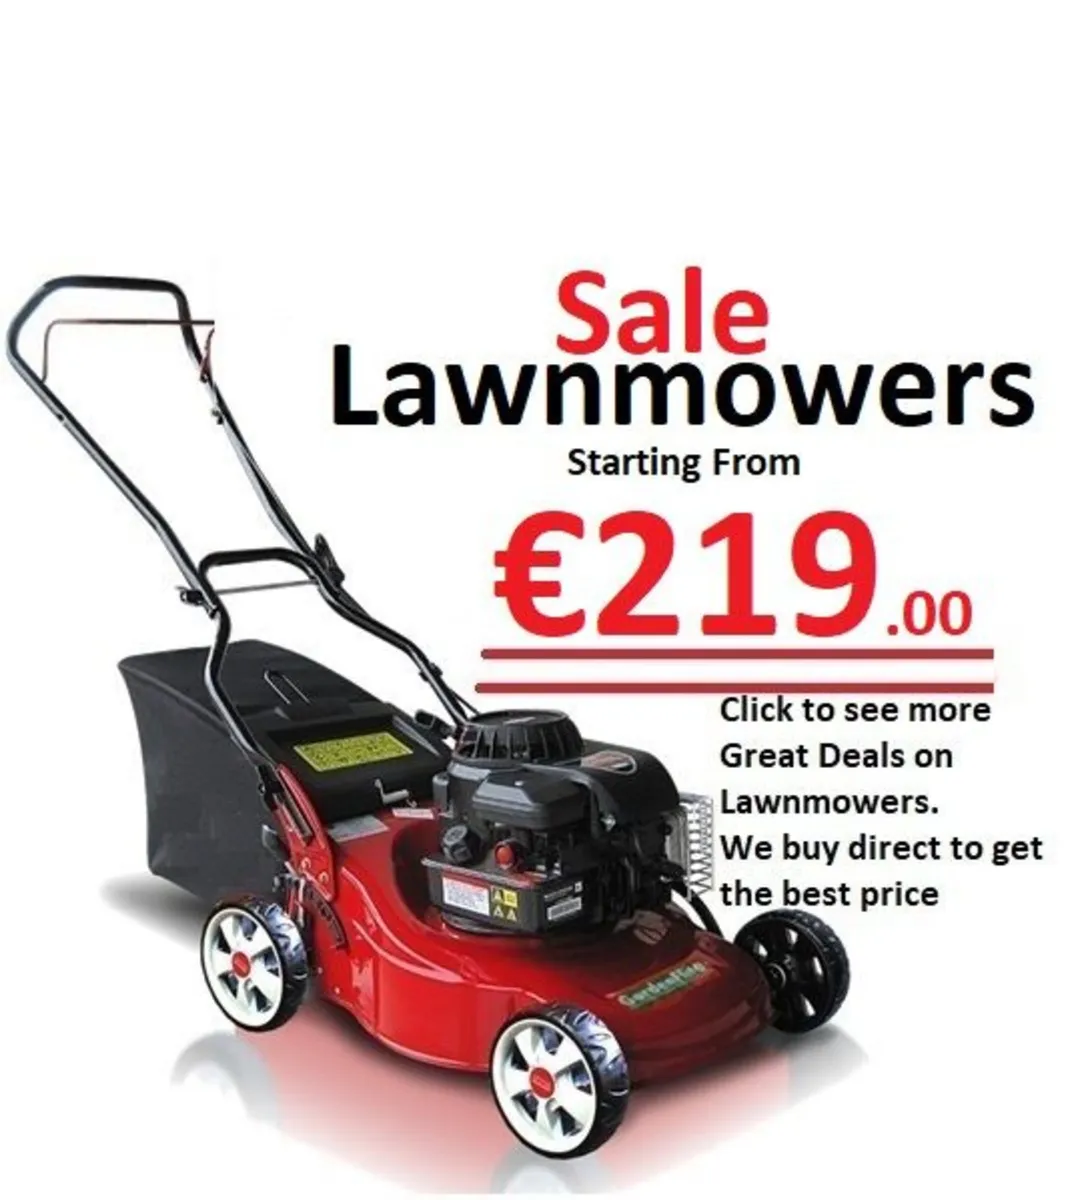 Briggs & Stratton Petrol lawnmowers sale 30% off - Image 1